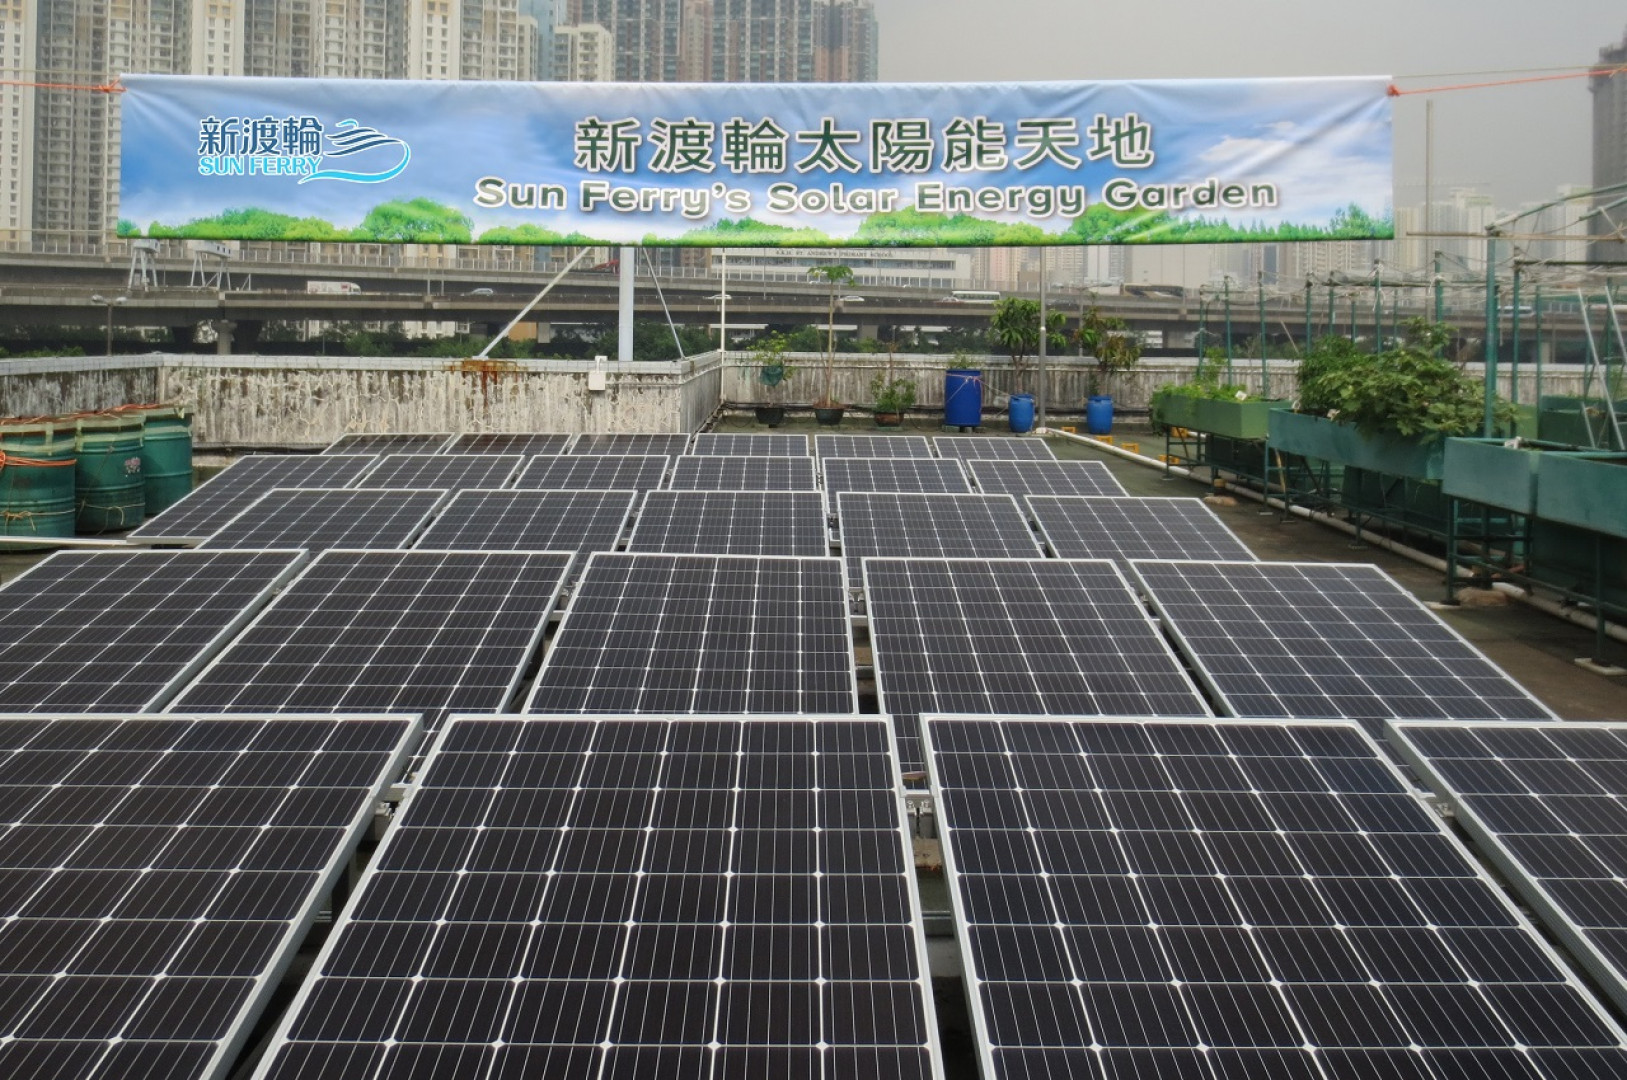 First Ferry’s Solar Energy Garden